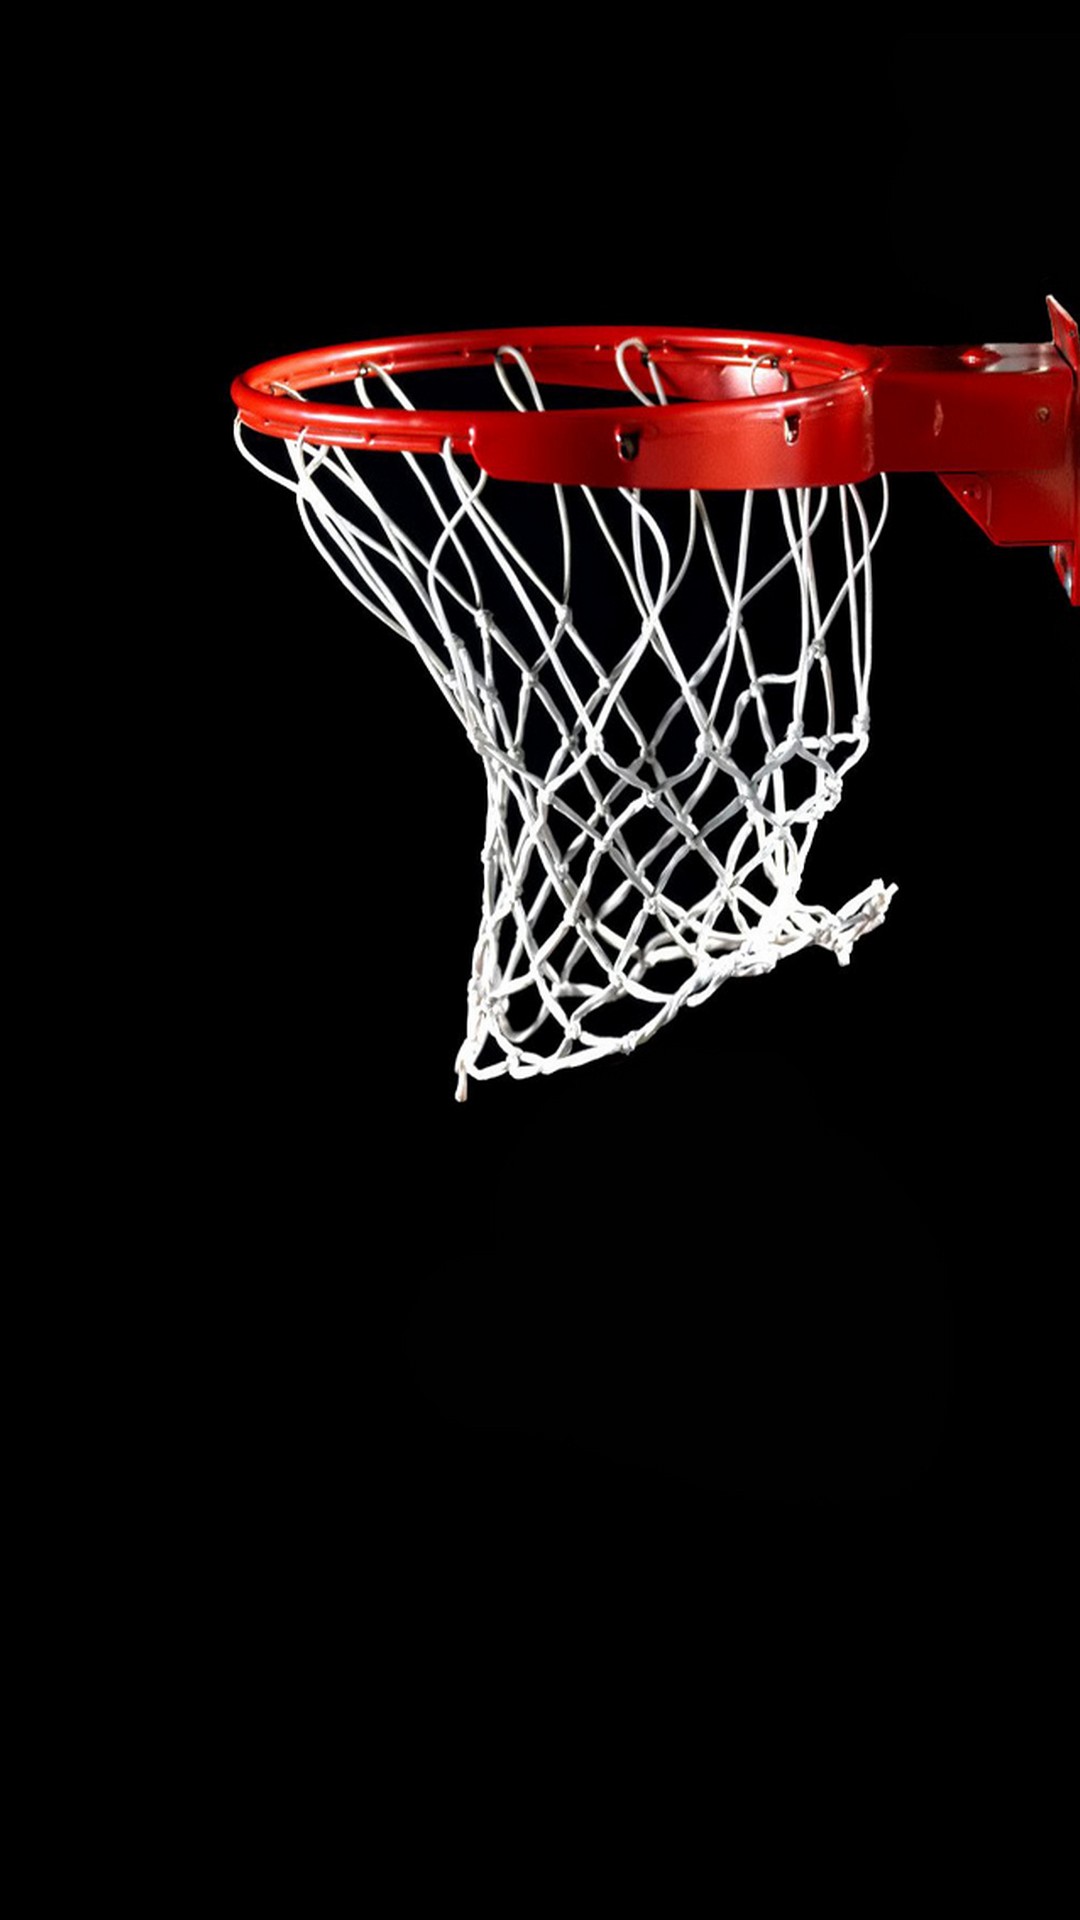 NBA HD Wallpapers For Mobile | 2021 Basketball Wallpaper